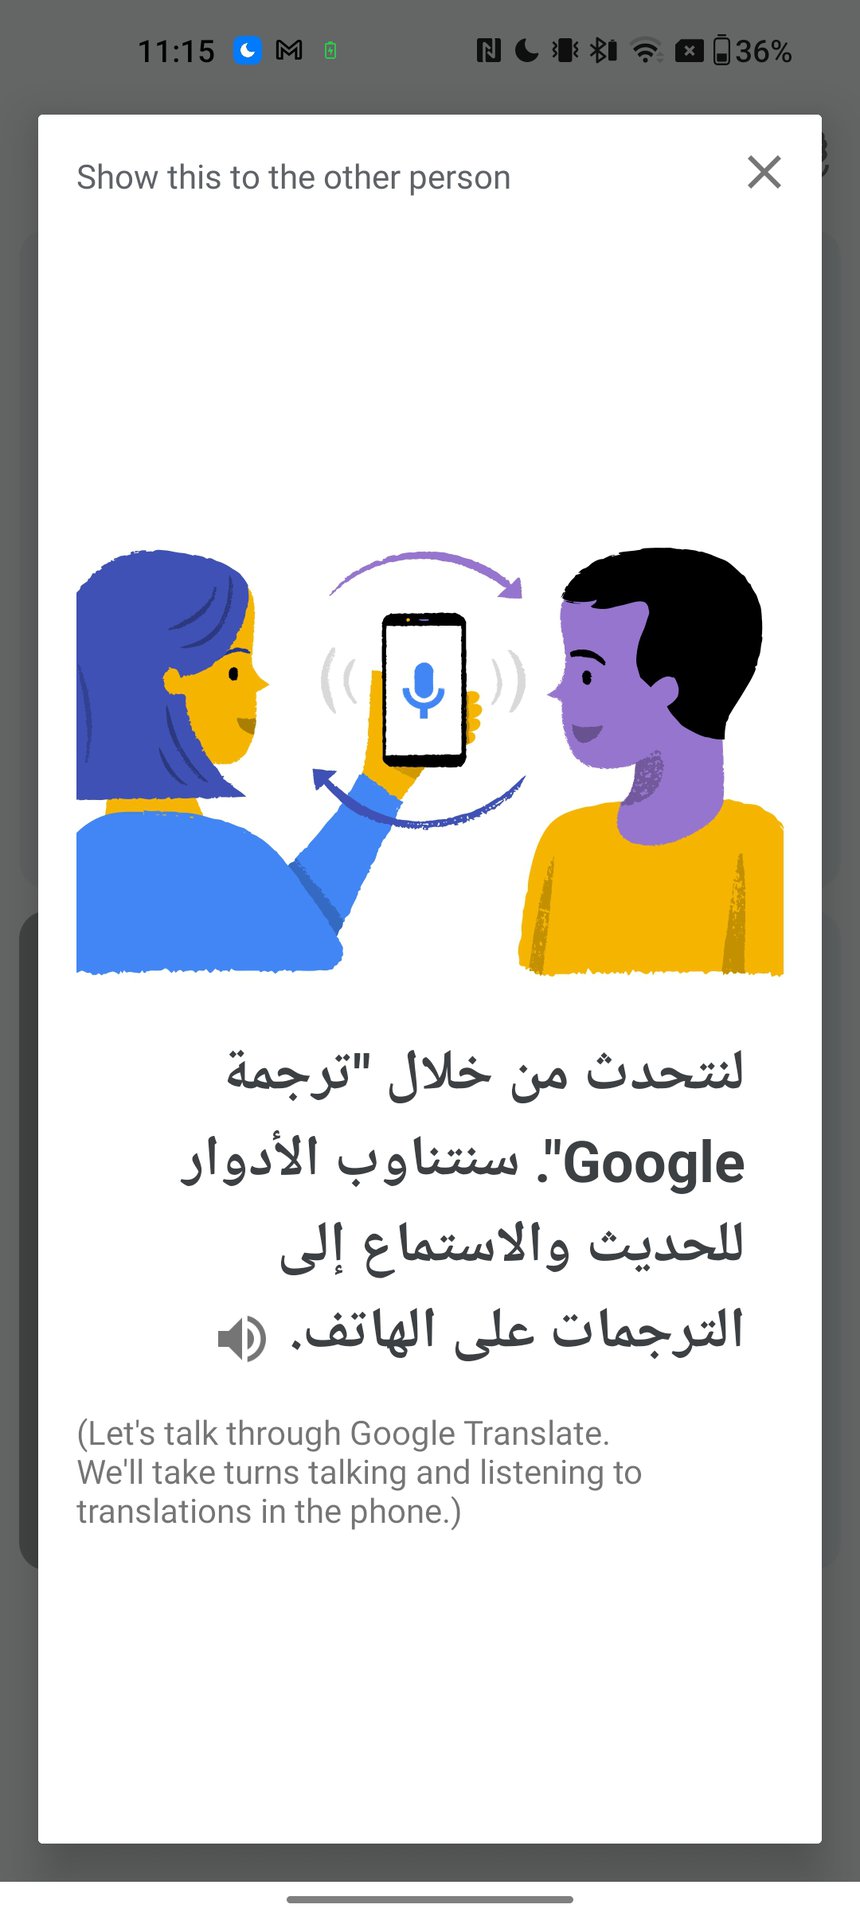 Google Translate disclaimer